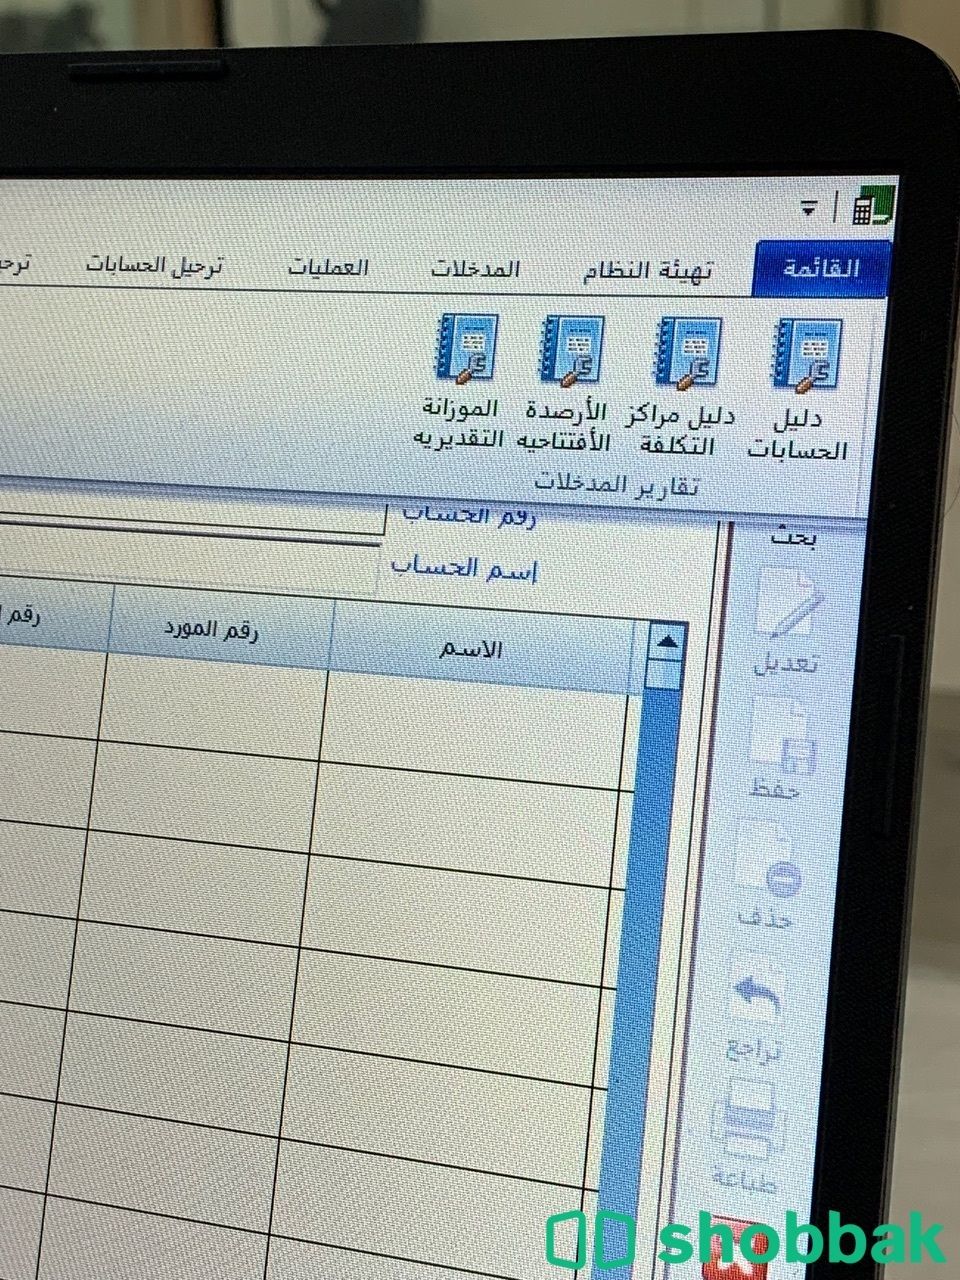 برنامج محاسبي  للمحلات والبقالات  Shobbak Saudi Arabia